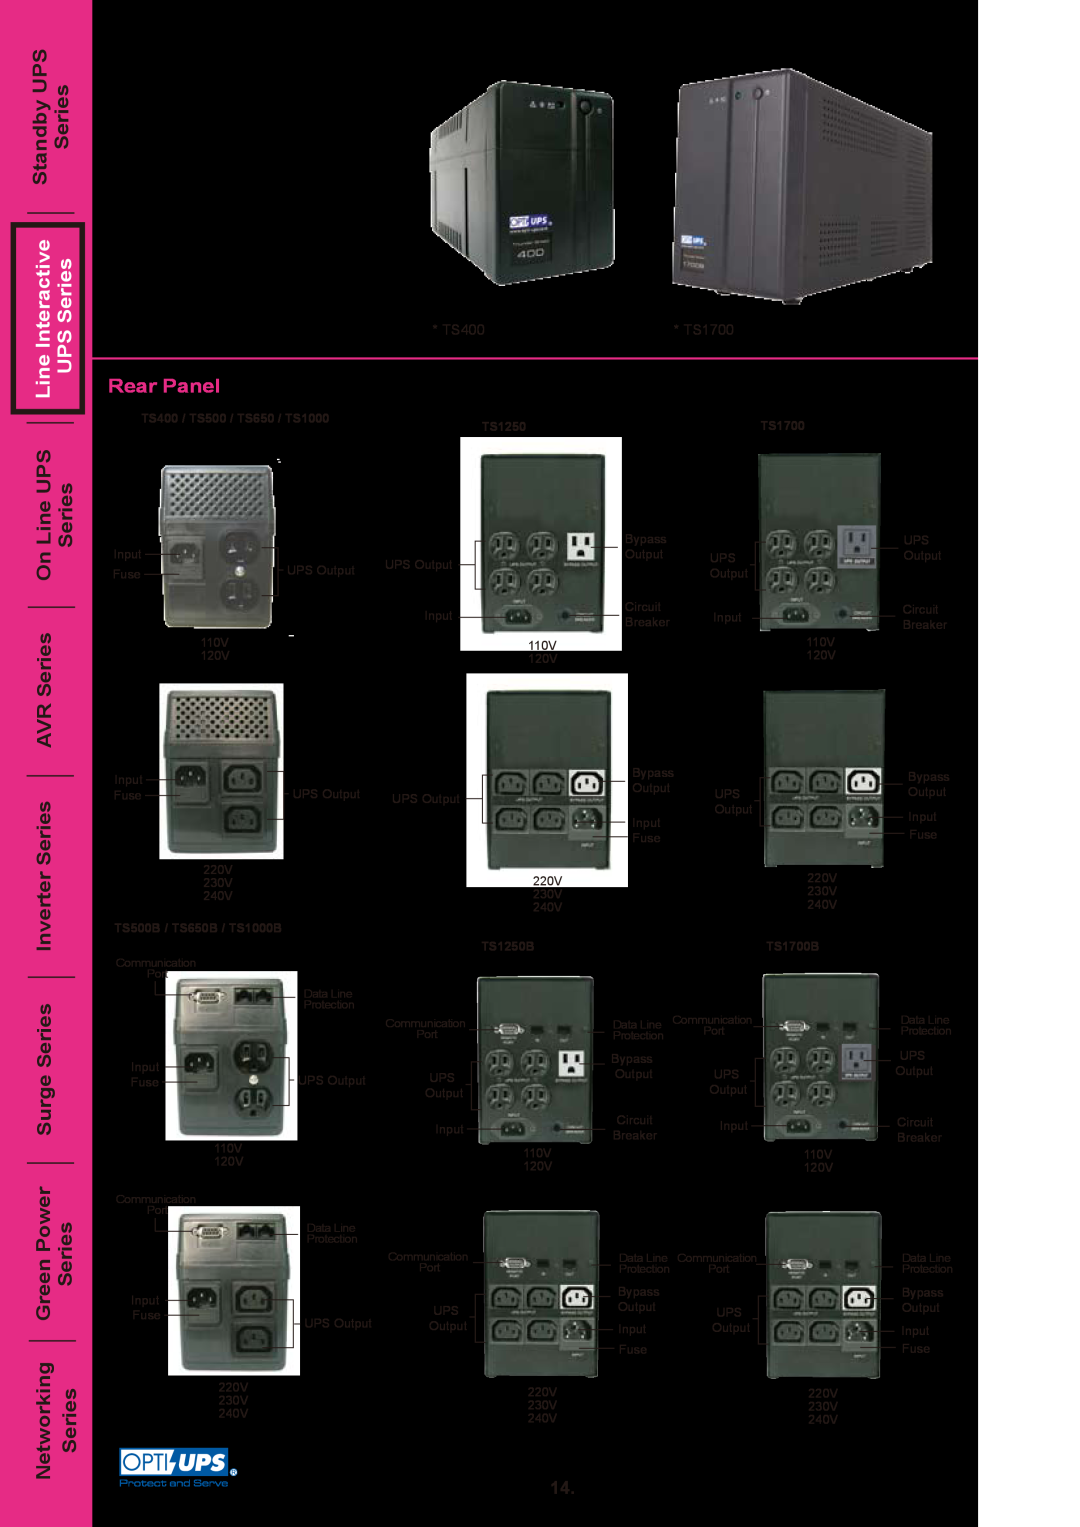 OPTI-UPS TS650W Line UPS Series, Inverter Series AVR Series On, Networking Green Power Surge Series Series, Rear Panel 